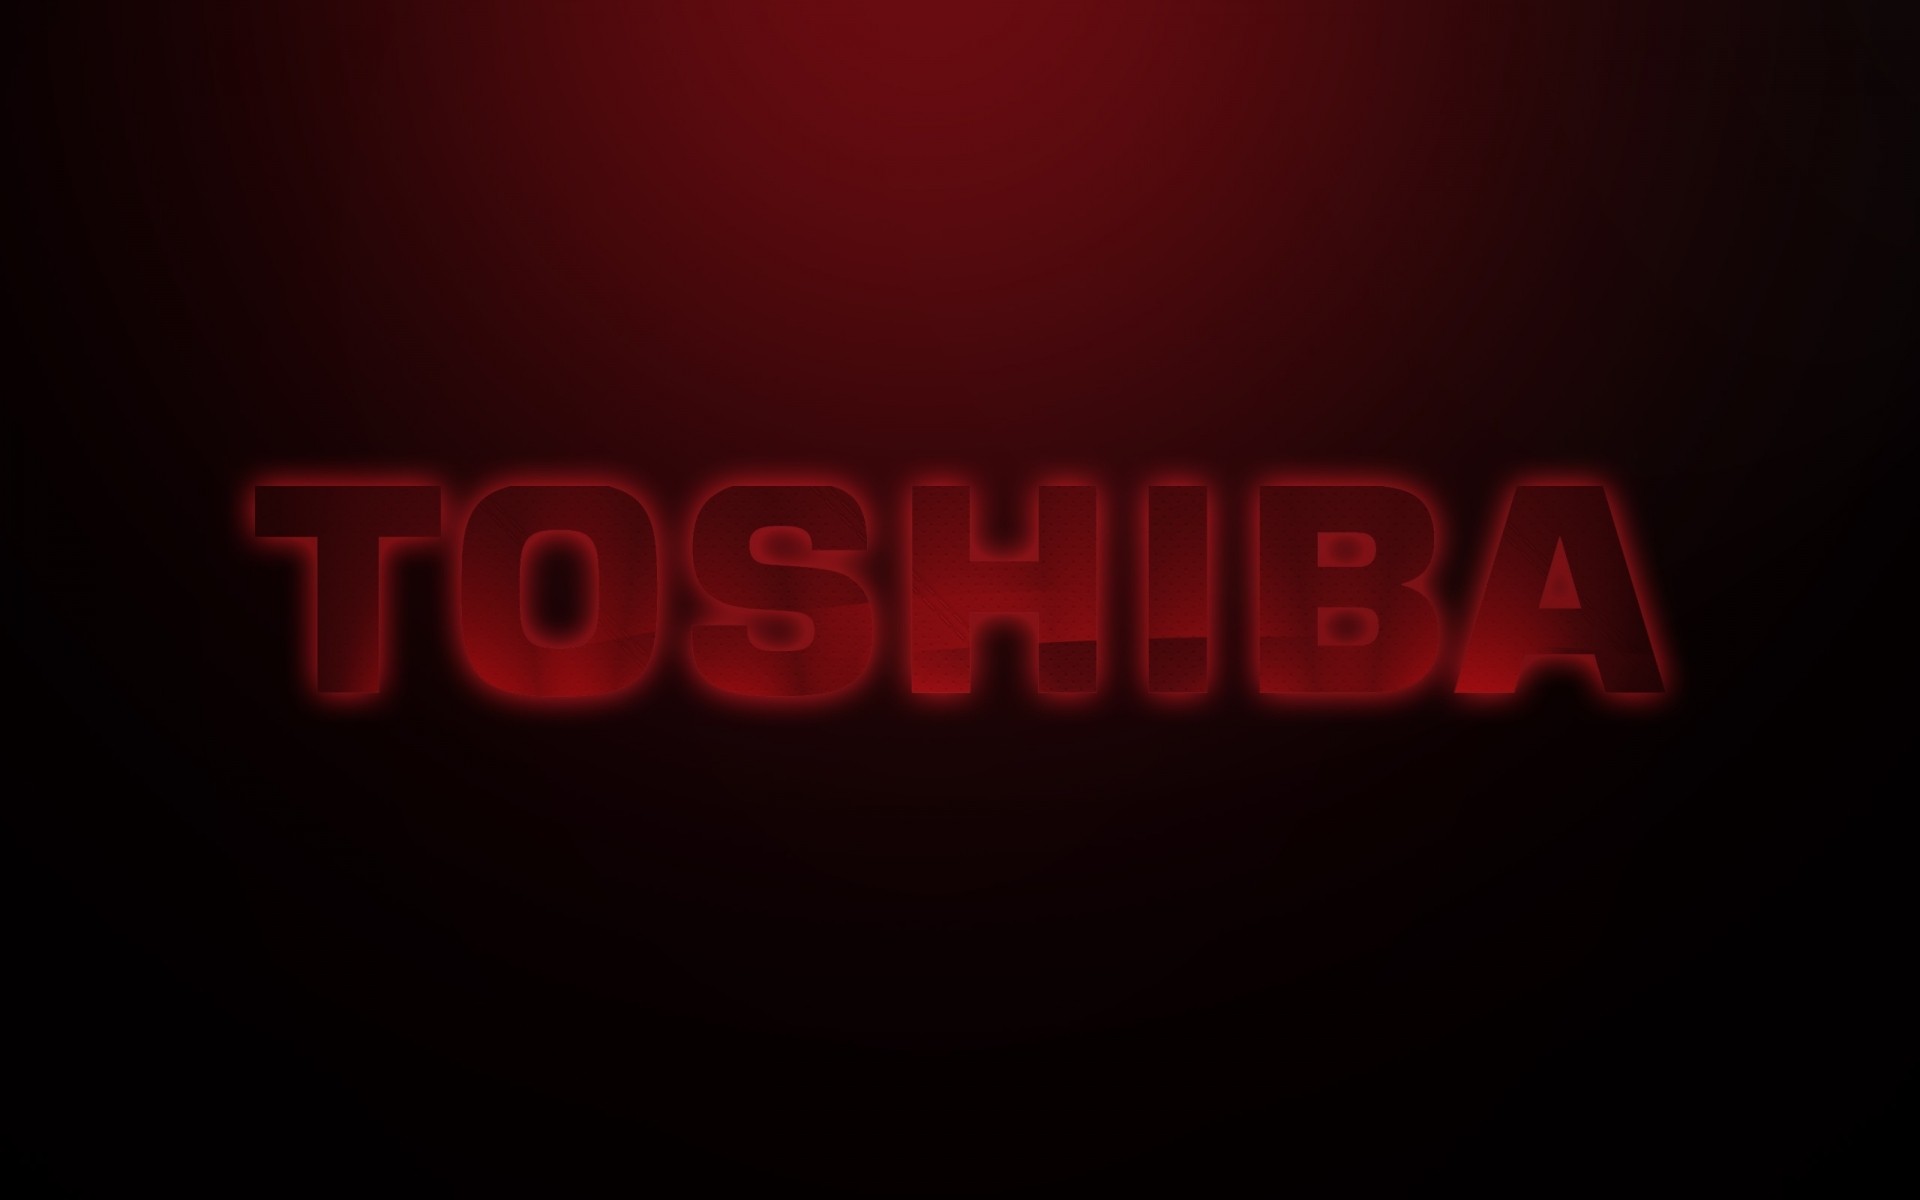 toshiba desktop dark abstract design light danger business hot element illustration symbol